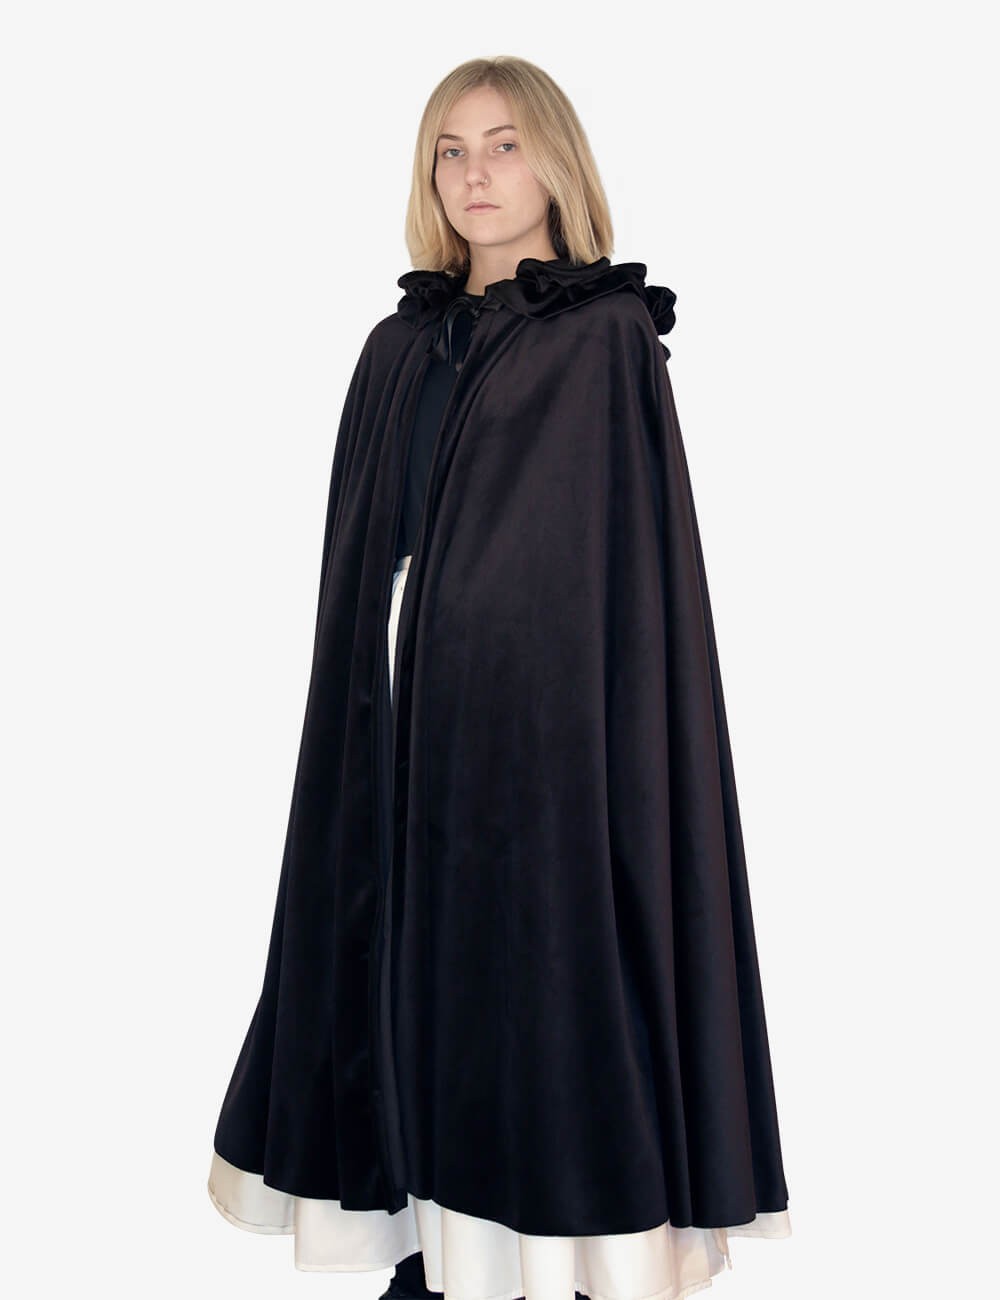 Medieval Velvet Cloak with Hood